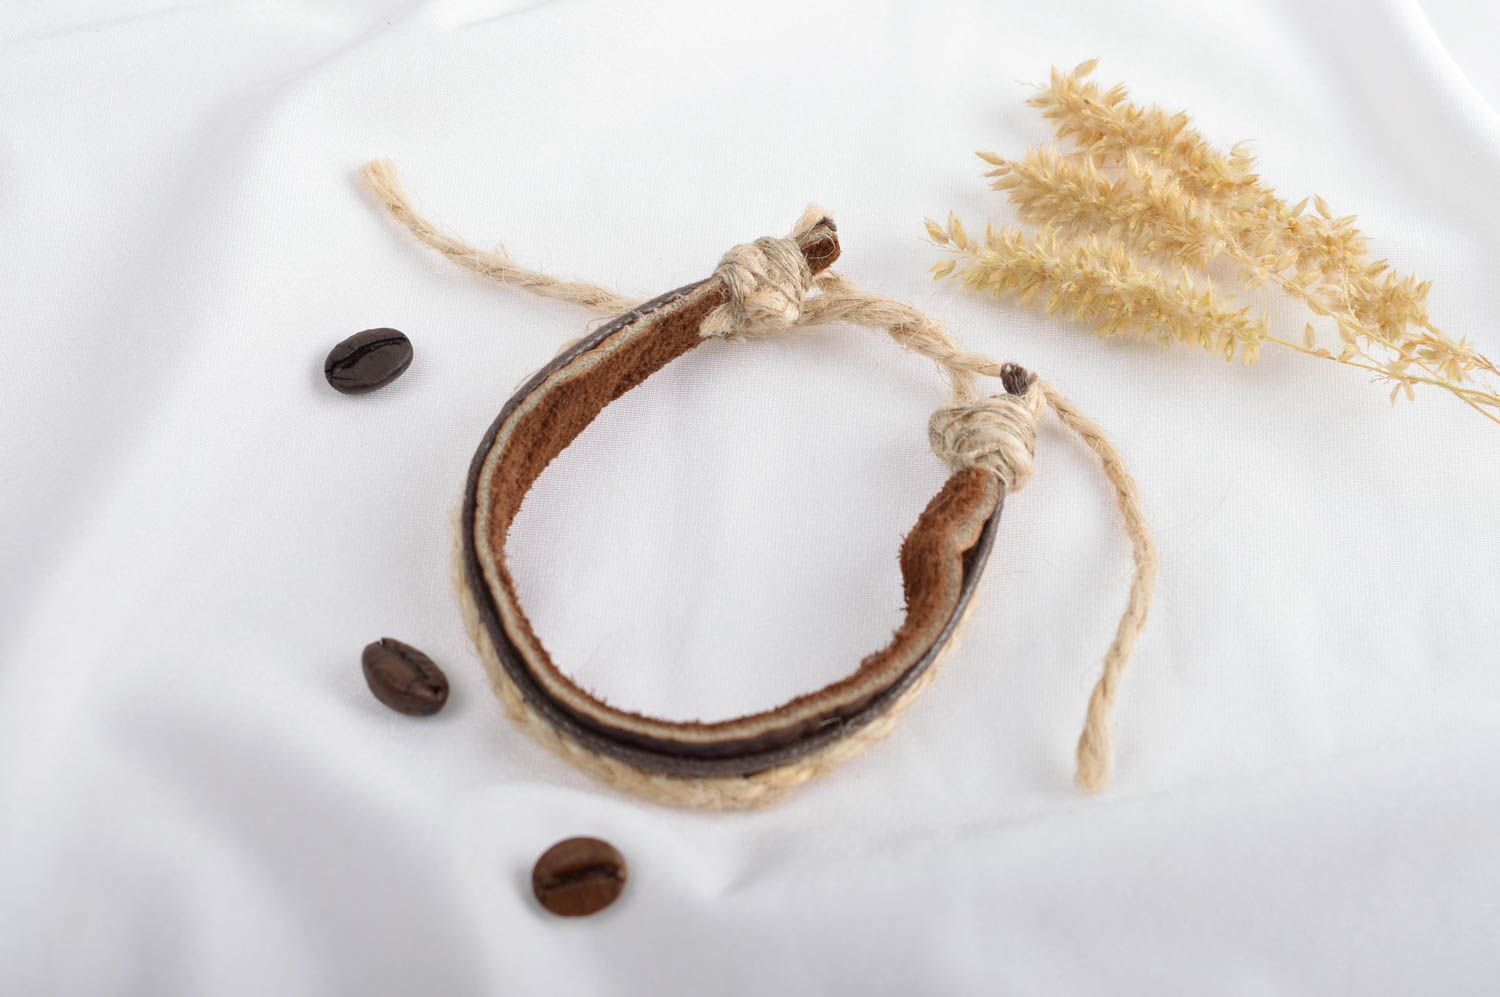 Handmade leather bracelet fashion trends artisan jewelry designs gift ideas photo 1